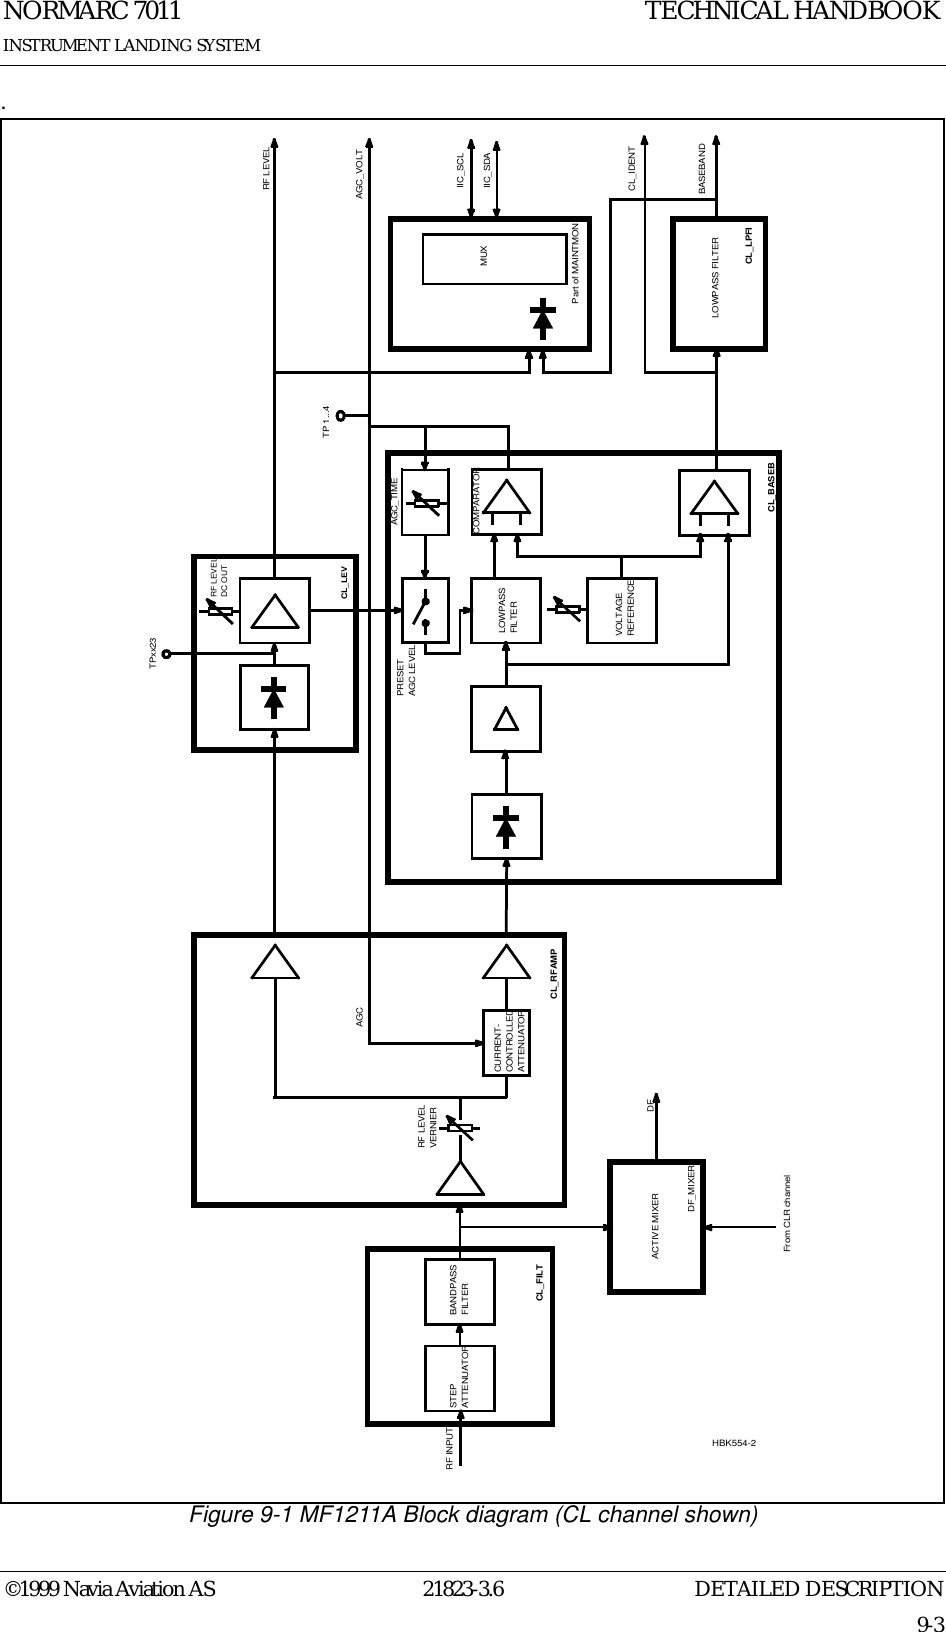 DETAILED DESCRIPTIONNORMARC 701121823-3.69-3INSTRUMENT LANDING SYSTEMTECHNICAL HANDBOOK©1999 Navia Aviation AS.Figure 9-1 MF1211A Block diagram (CL channel shown)CL_BASEBCURRENT-CONTROLLEDATTENUATORCL_RFAMPRF LEVELVERNIERSTEPATTENUATORBANDPASSFILTERCL_FILTLOWPASS FILTERBASEBANDRF INPUTCL_LPFIDF_MIXERACTIVE MIXERFrom CLR channelDFLOWPASSFILTERPRESETAGC LEVELRF LEVELDC OUTCL_LEVRF LEVELAGCMUXPart of MAINTMONCL_IDENTIIC_SDAIIC_SCLVOLTAGEREFERENCECOMPARATORAGC_VOLTTP 1...4TPxx23AGC_TIMEHBK554-2